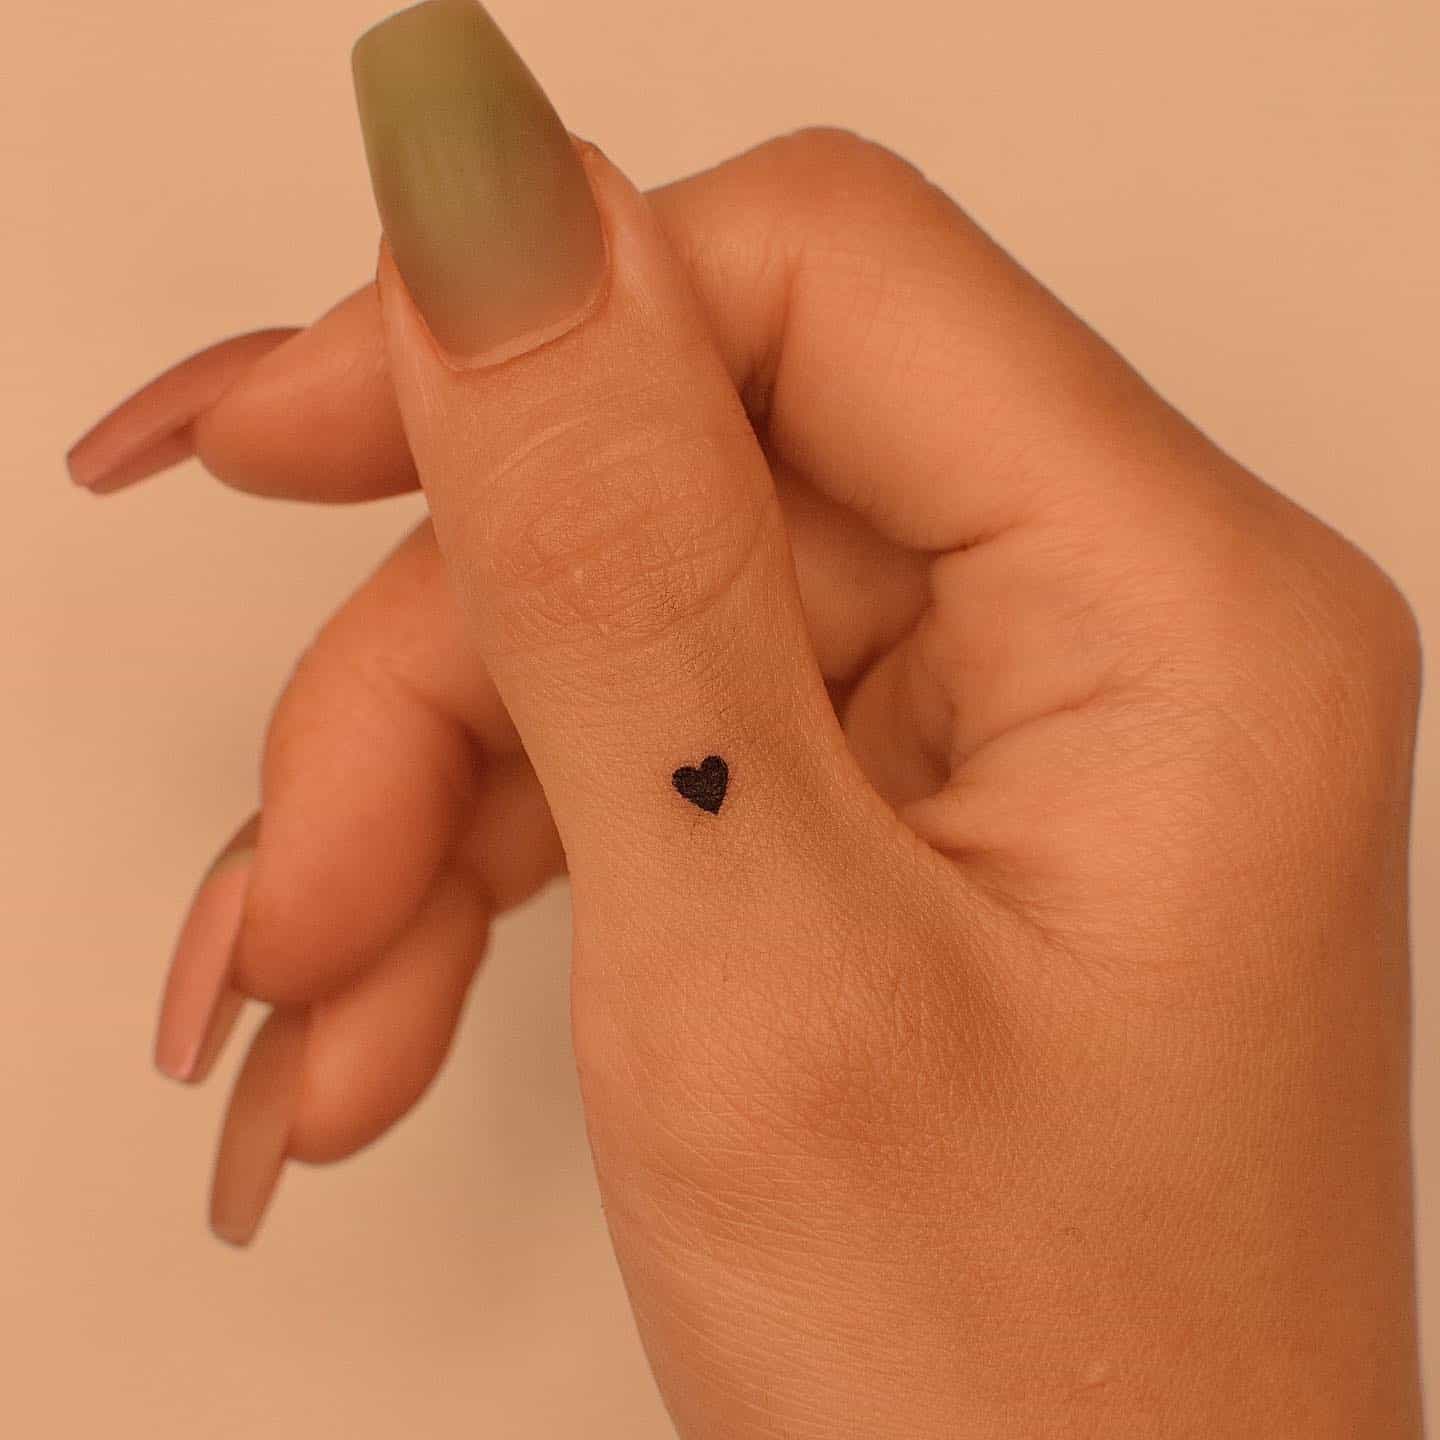 Cute heart tattoo by tattooer jina